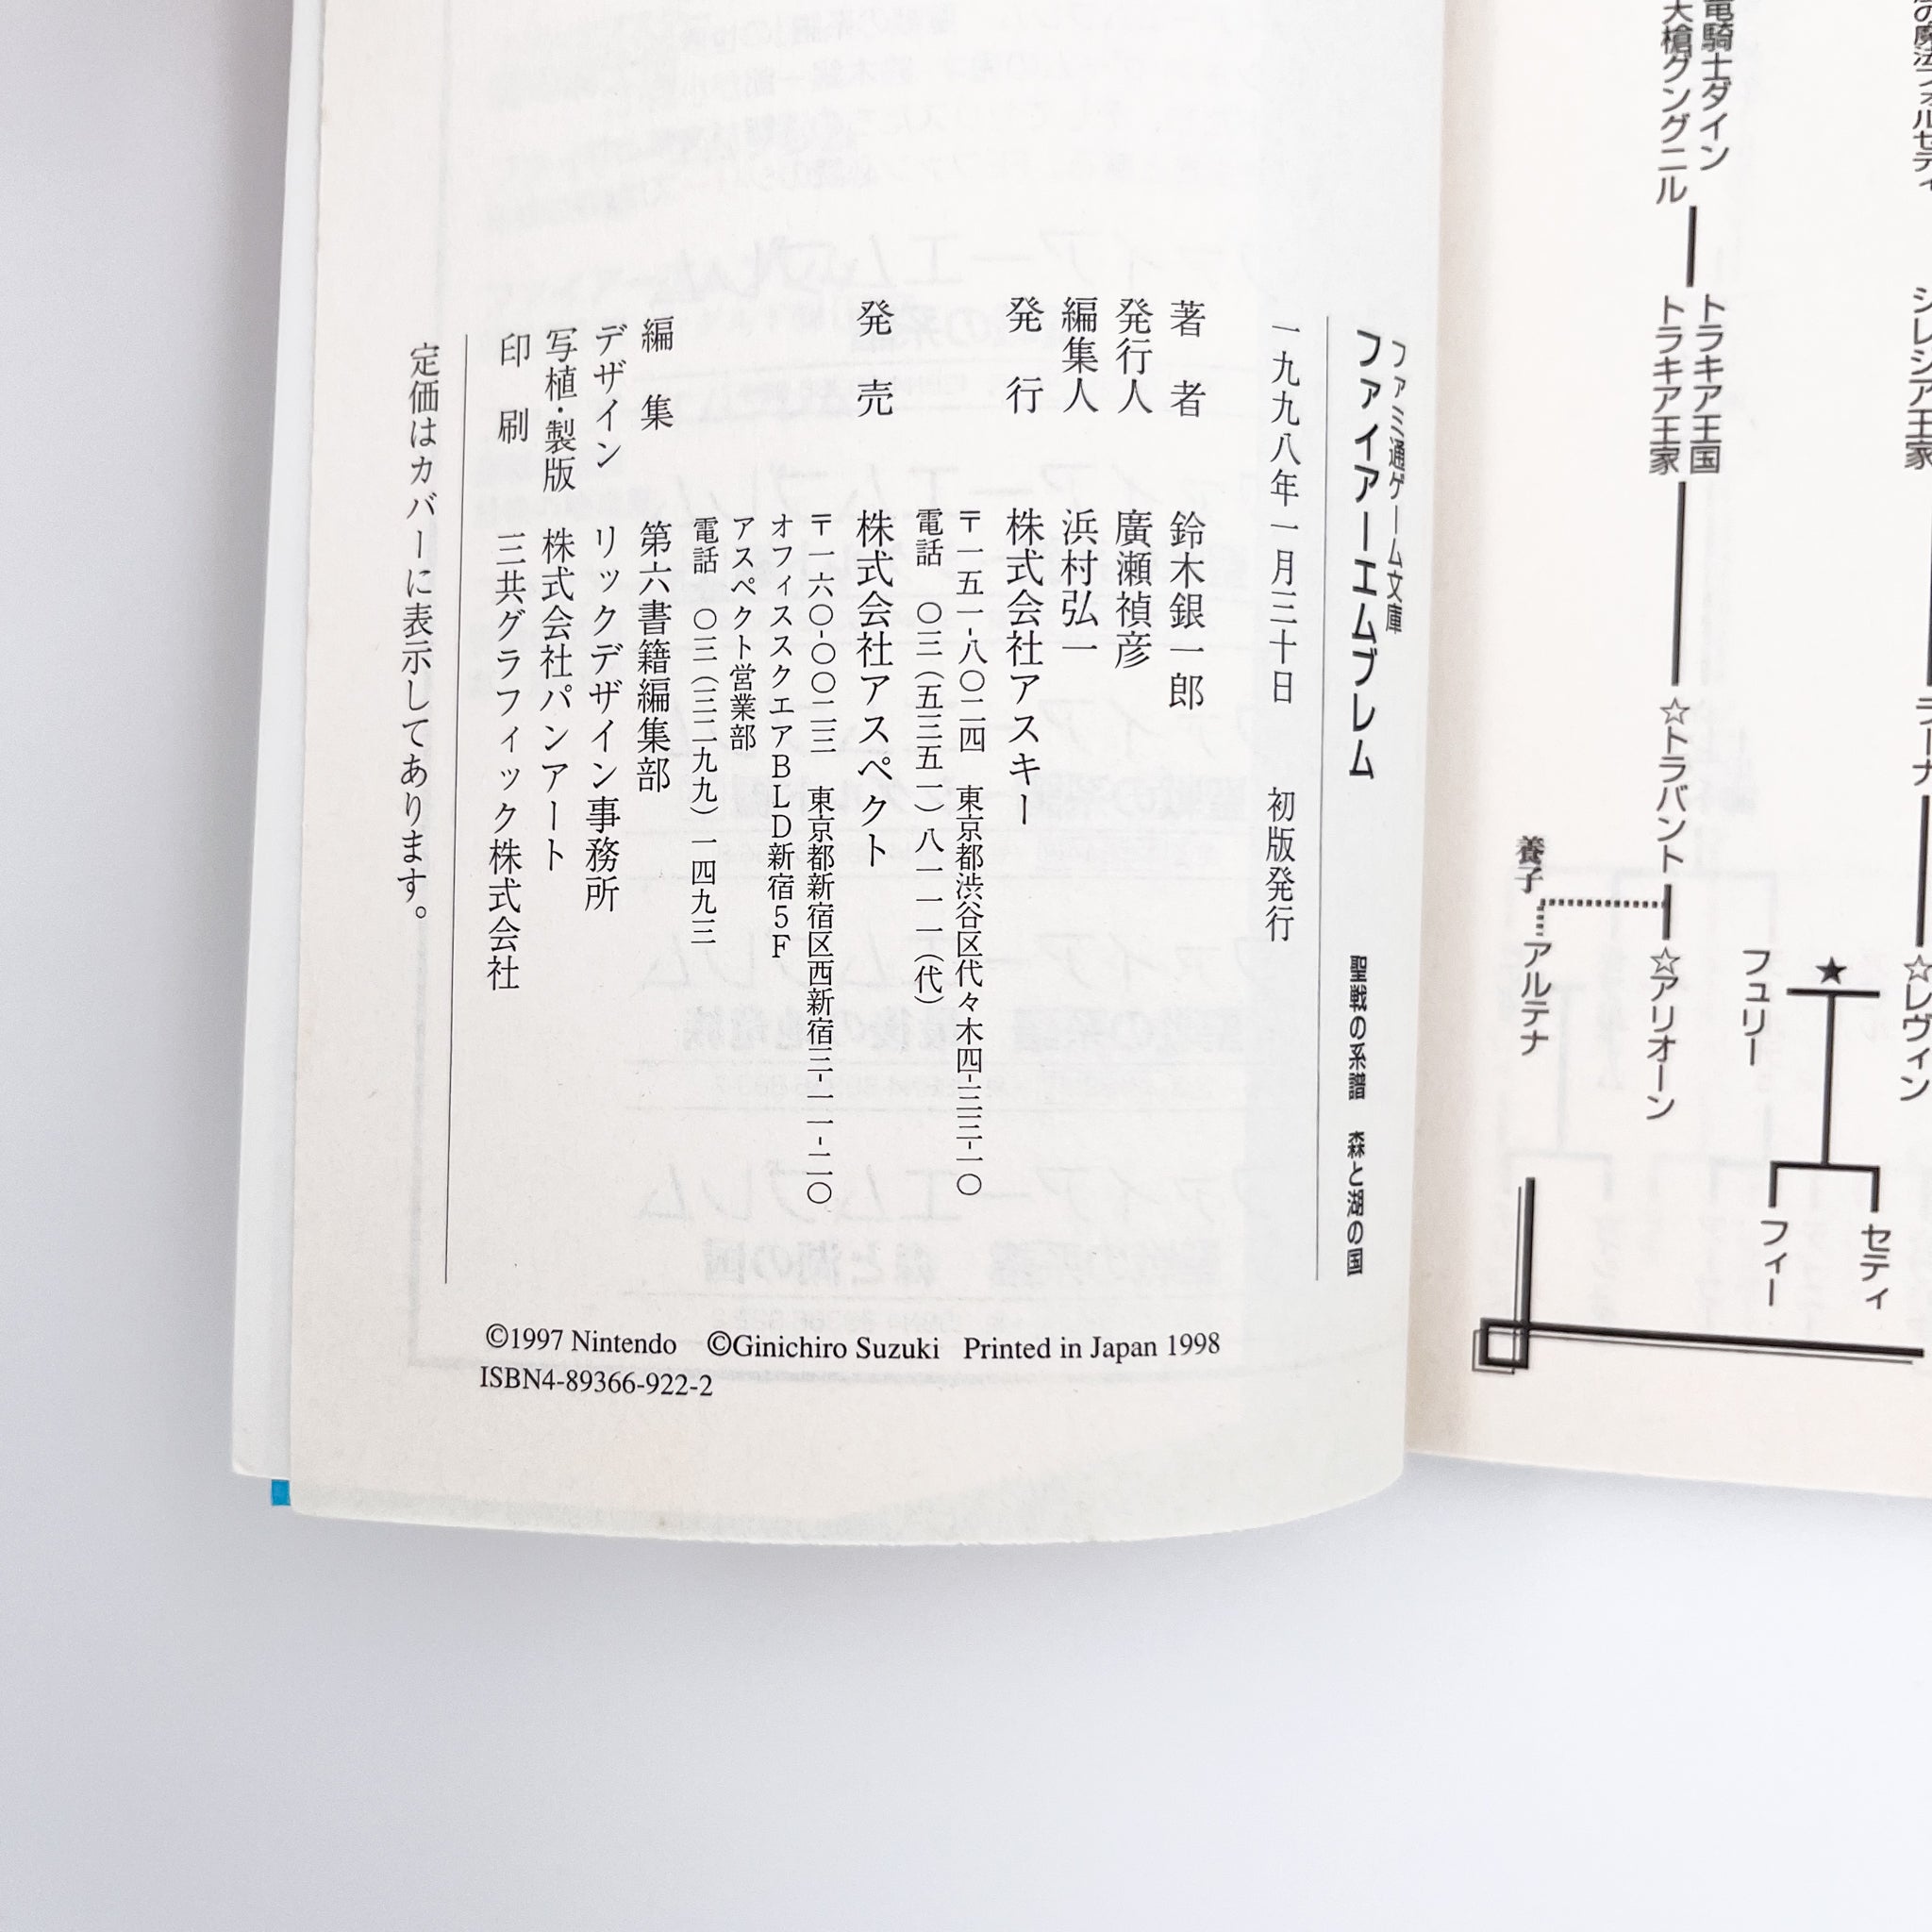 Fire Emblem: Genealogy of the Holy War - Mori to Mizuumi no Kuni light novel table of contents